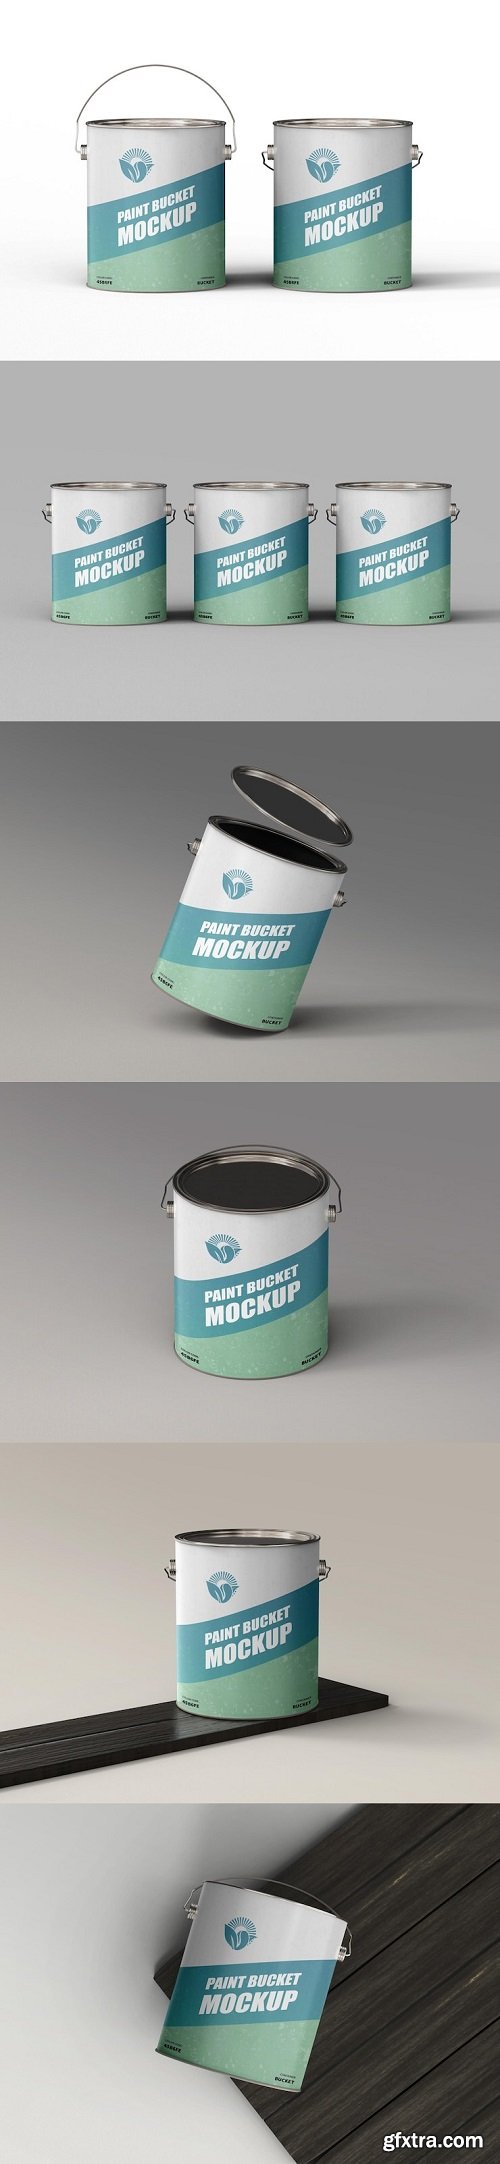 Metal paint bucket mockup